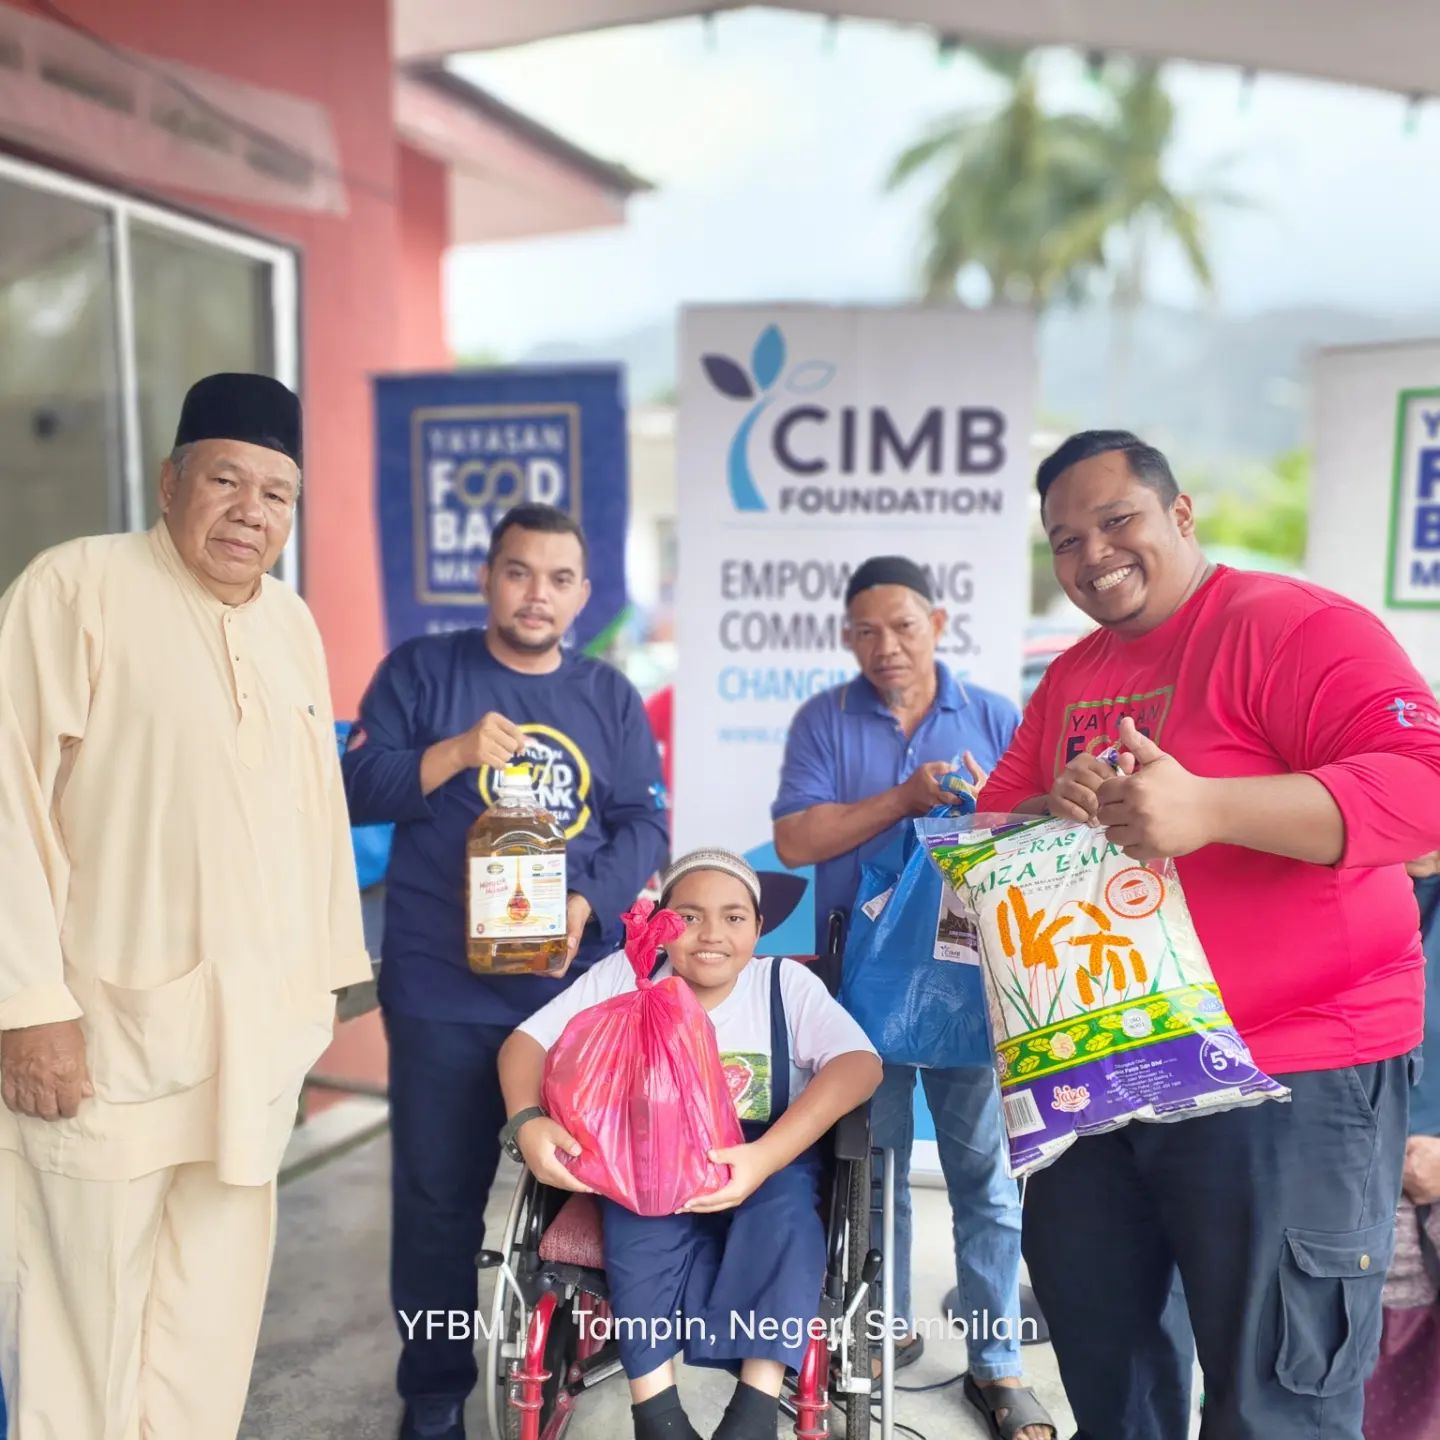 Food Bank Relief CIMB Foundation – Tampin, Negeri Sembilan